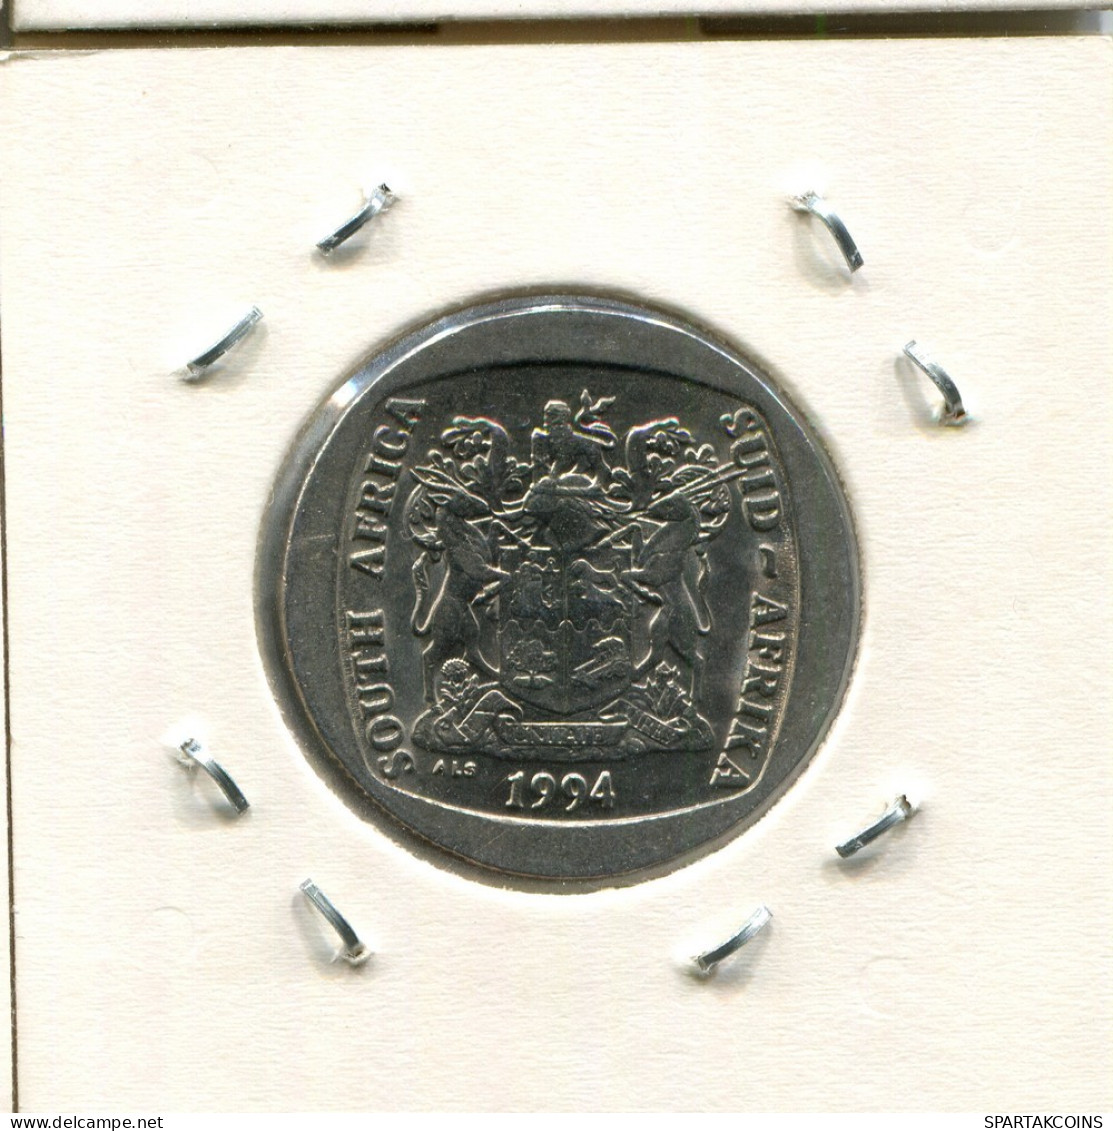 5 RAND 1994 SOUTH AFRICA Coin #AS288.U.A - Zuid-Afrika